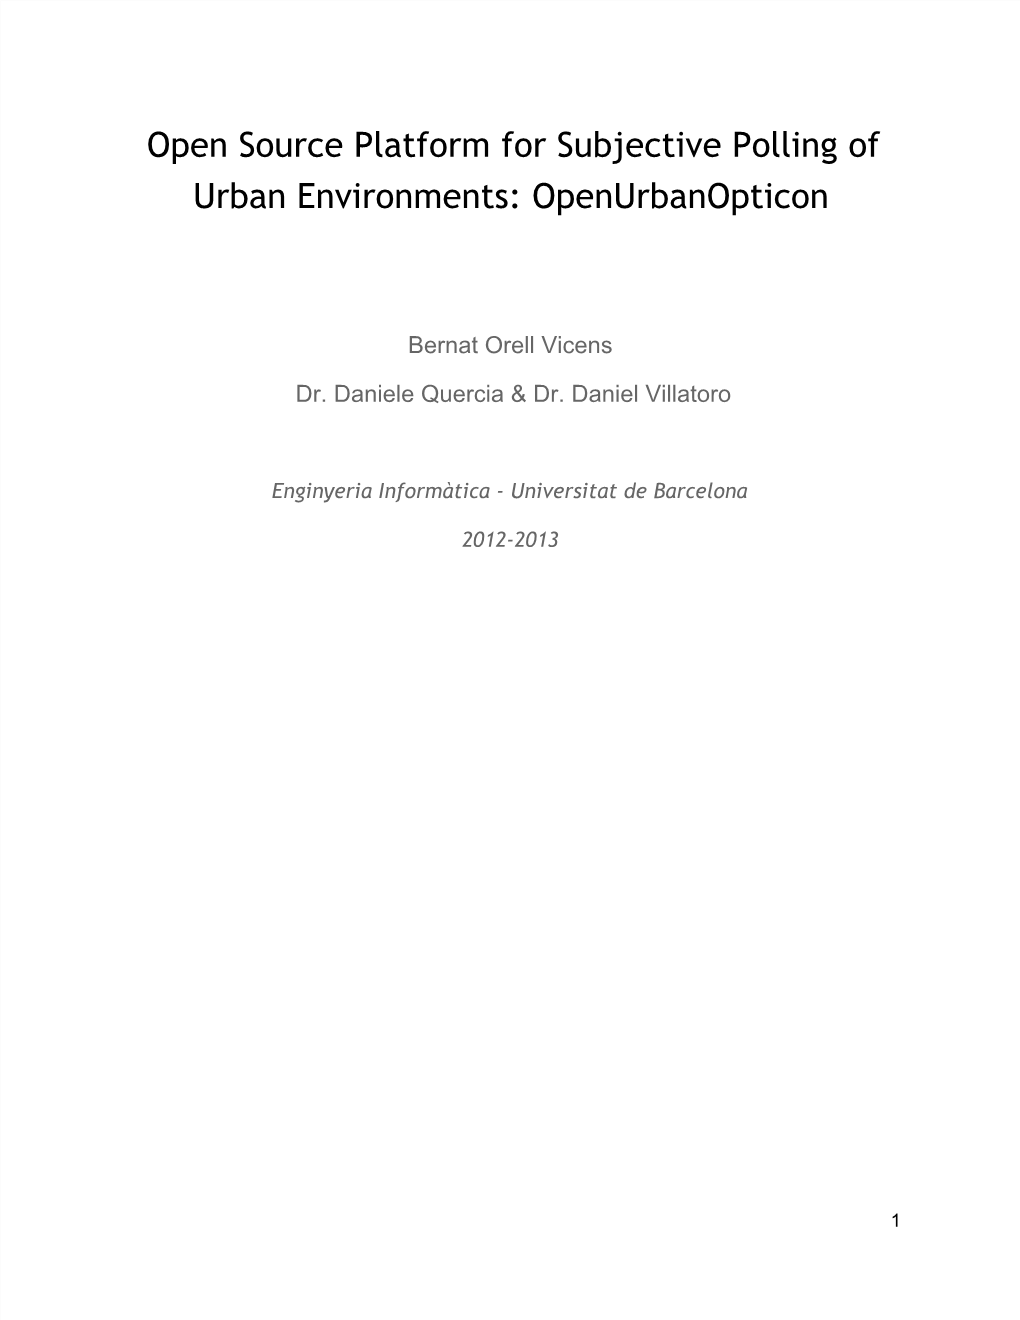 Open Source Platform for Subjective Polling of Urban Environments: Openurbanopticon